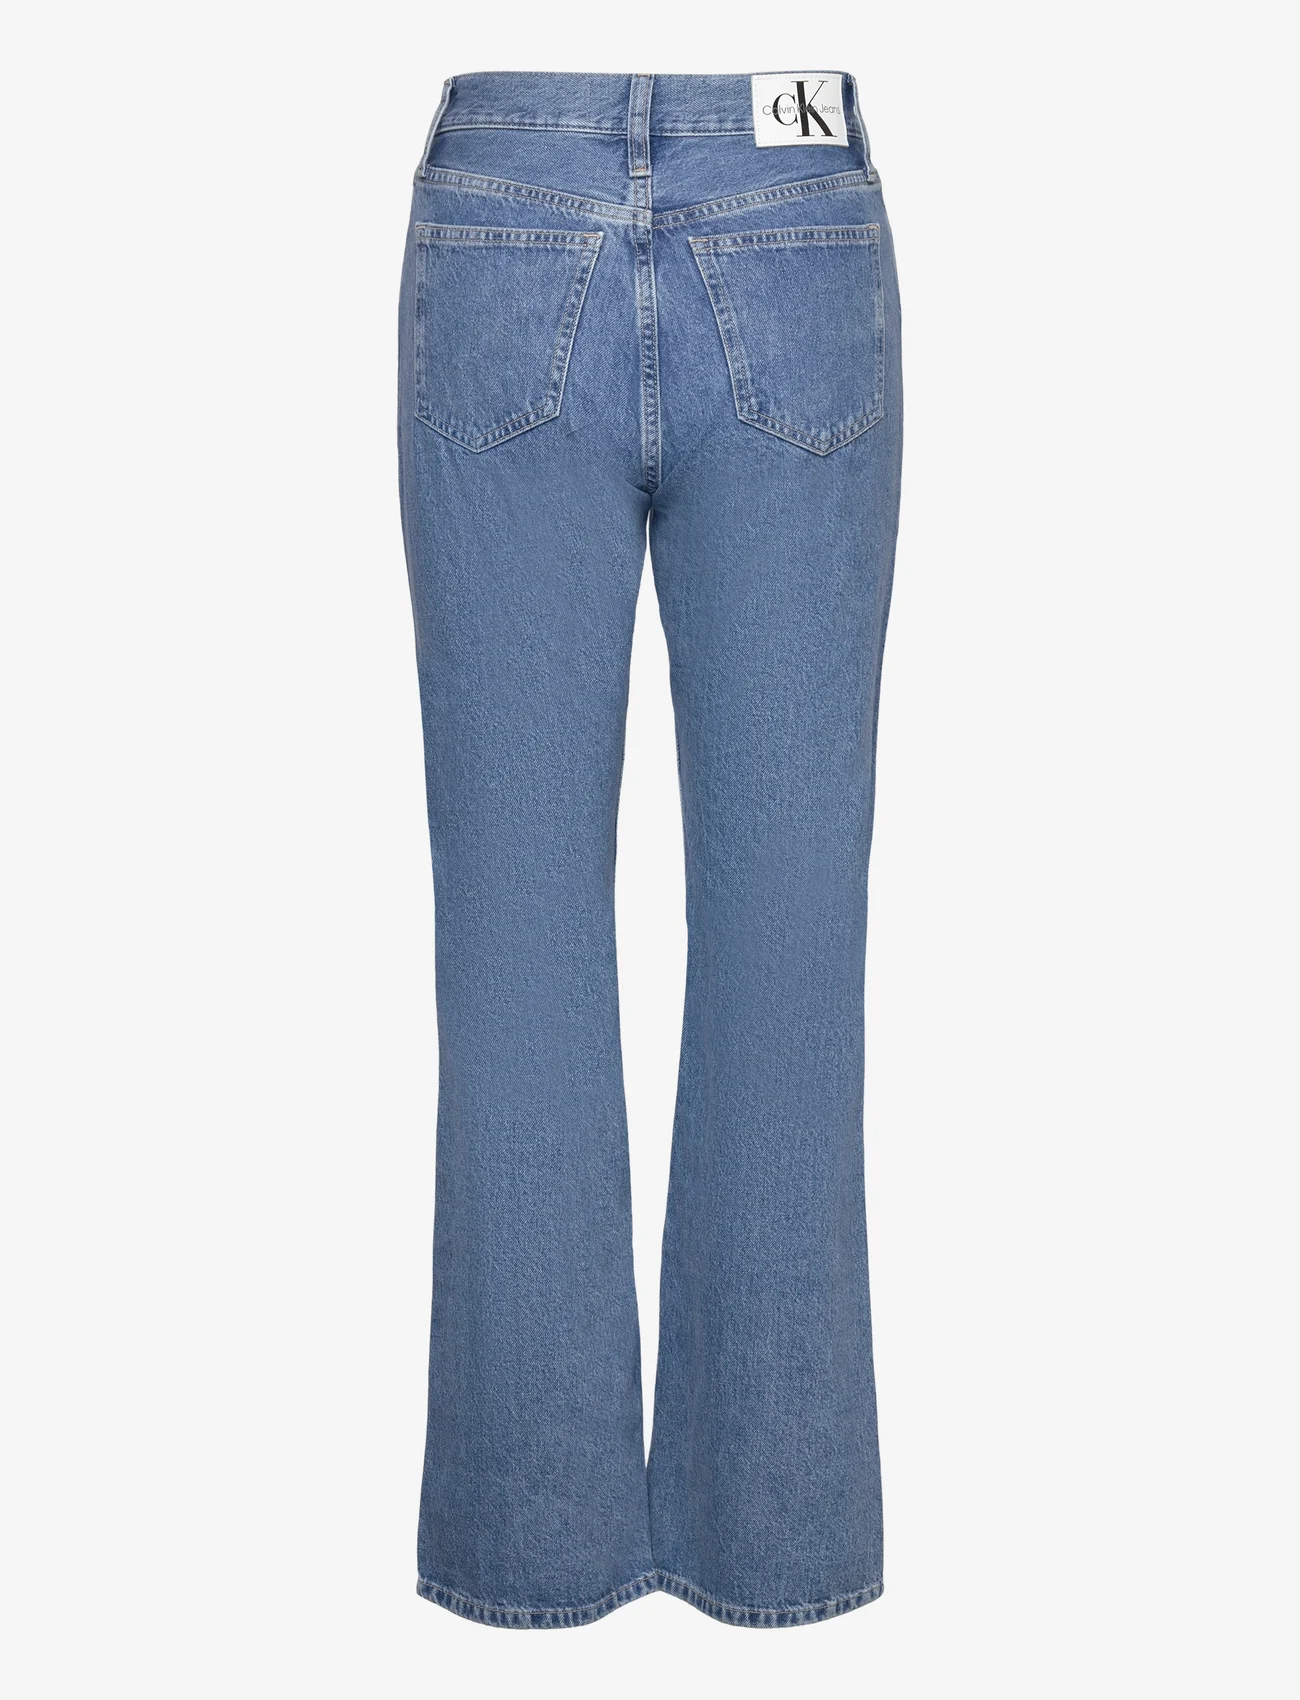 Calvin Klein Jeans - AUTHENTIC BOOTCUT - bootcut jeans - denim medium - 1